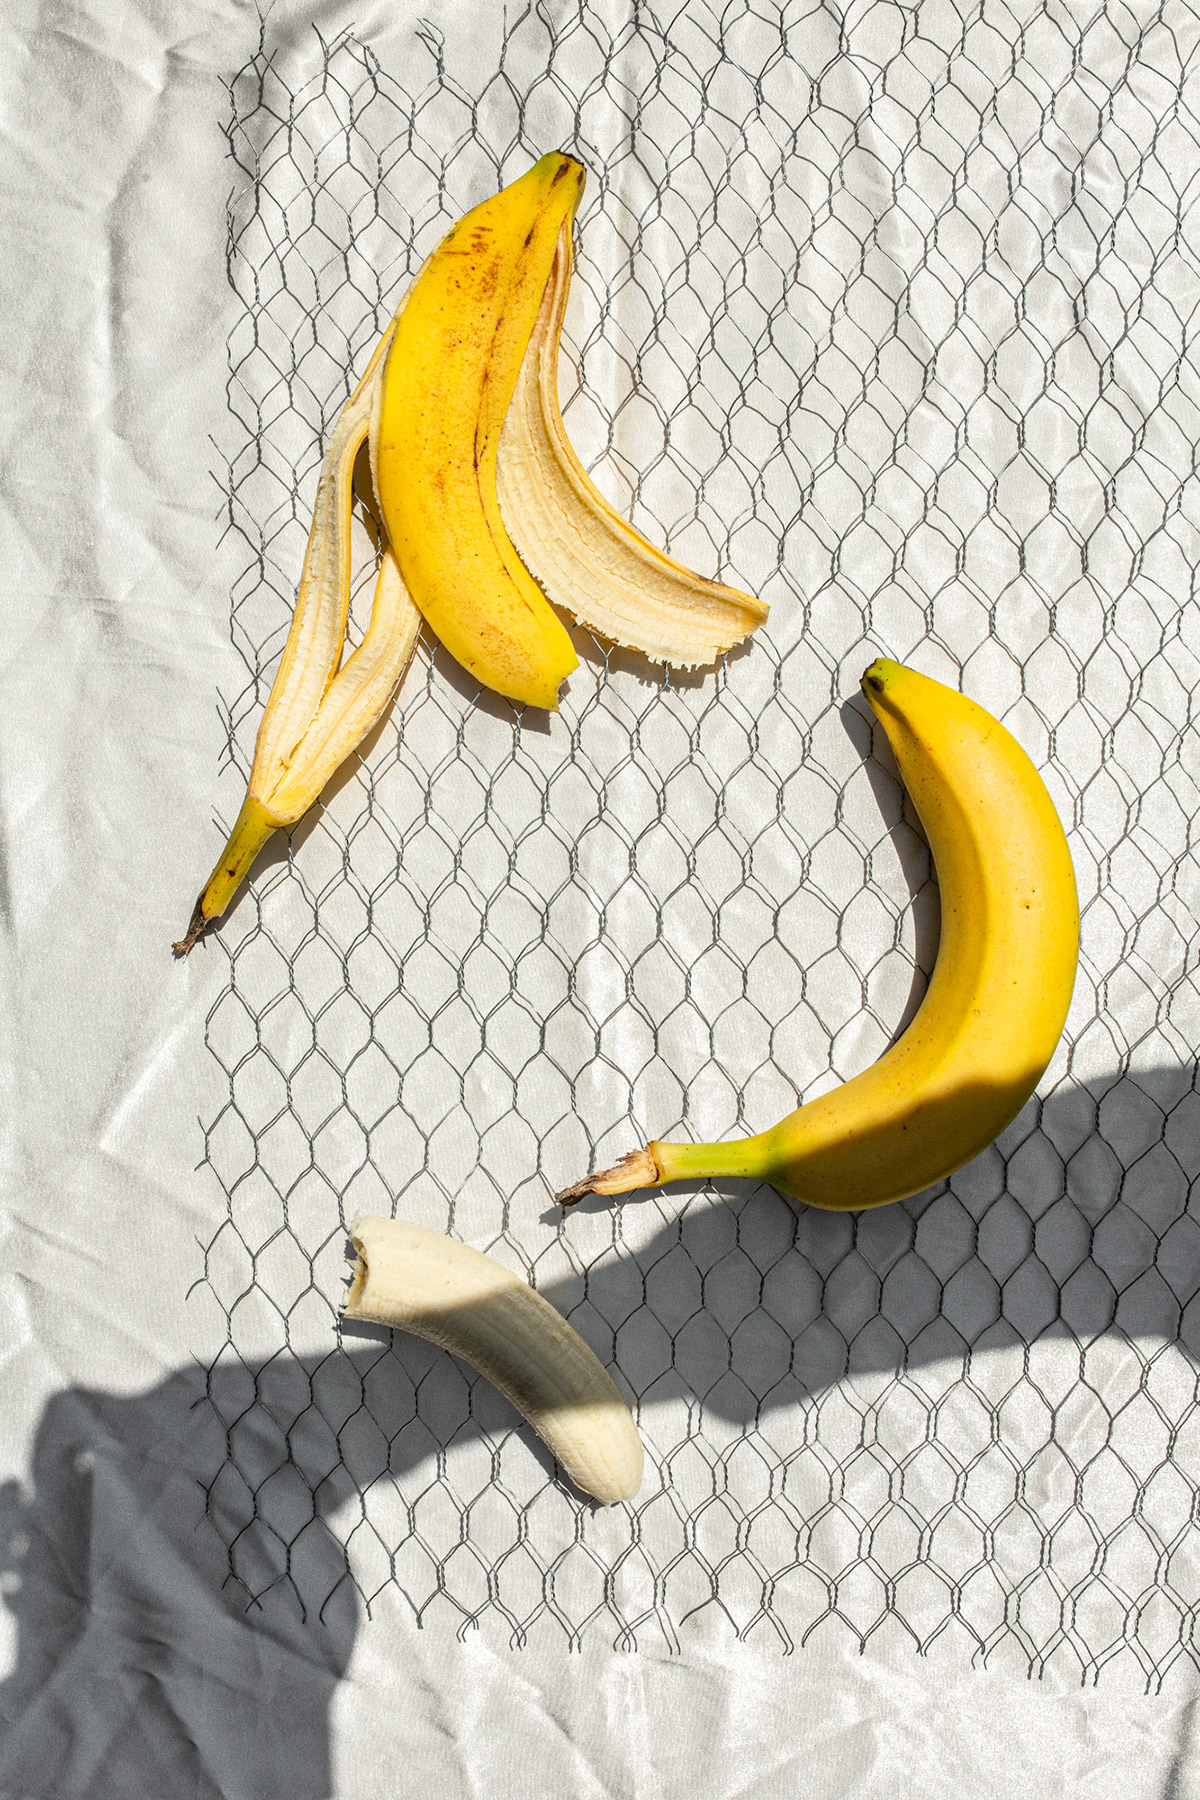 Image may contain: banana, indoor and cooking plantain